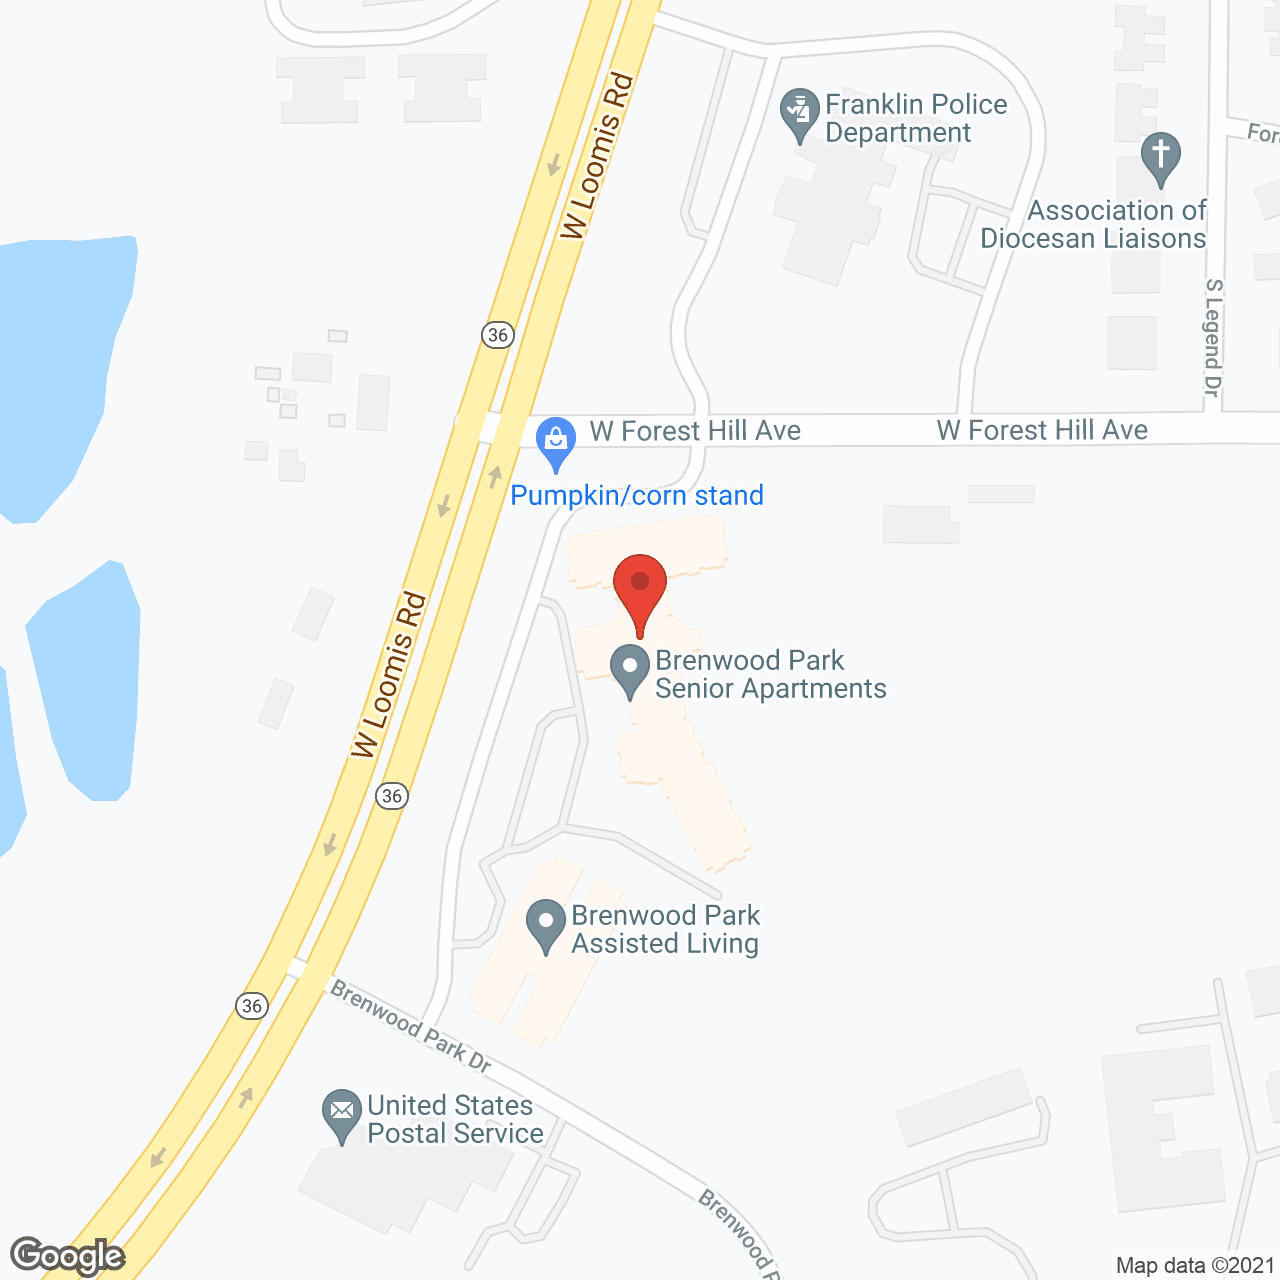 Brenwood Park in google map